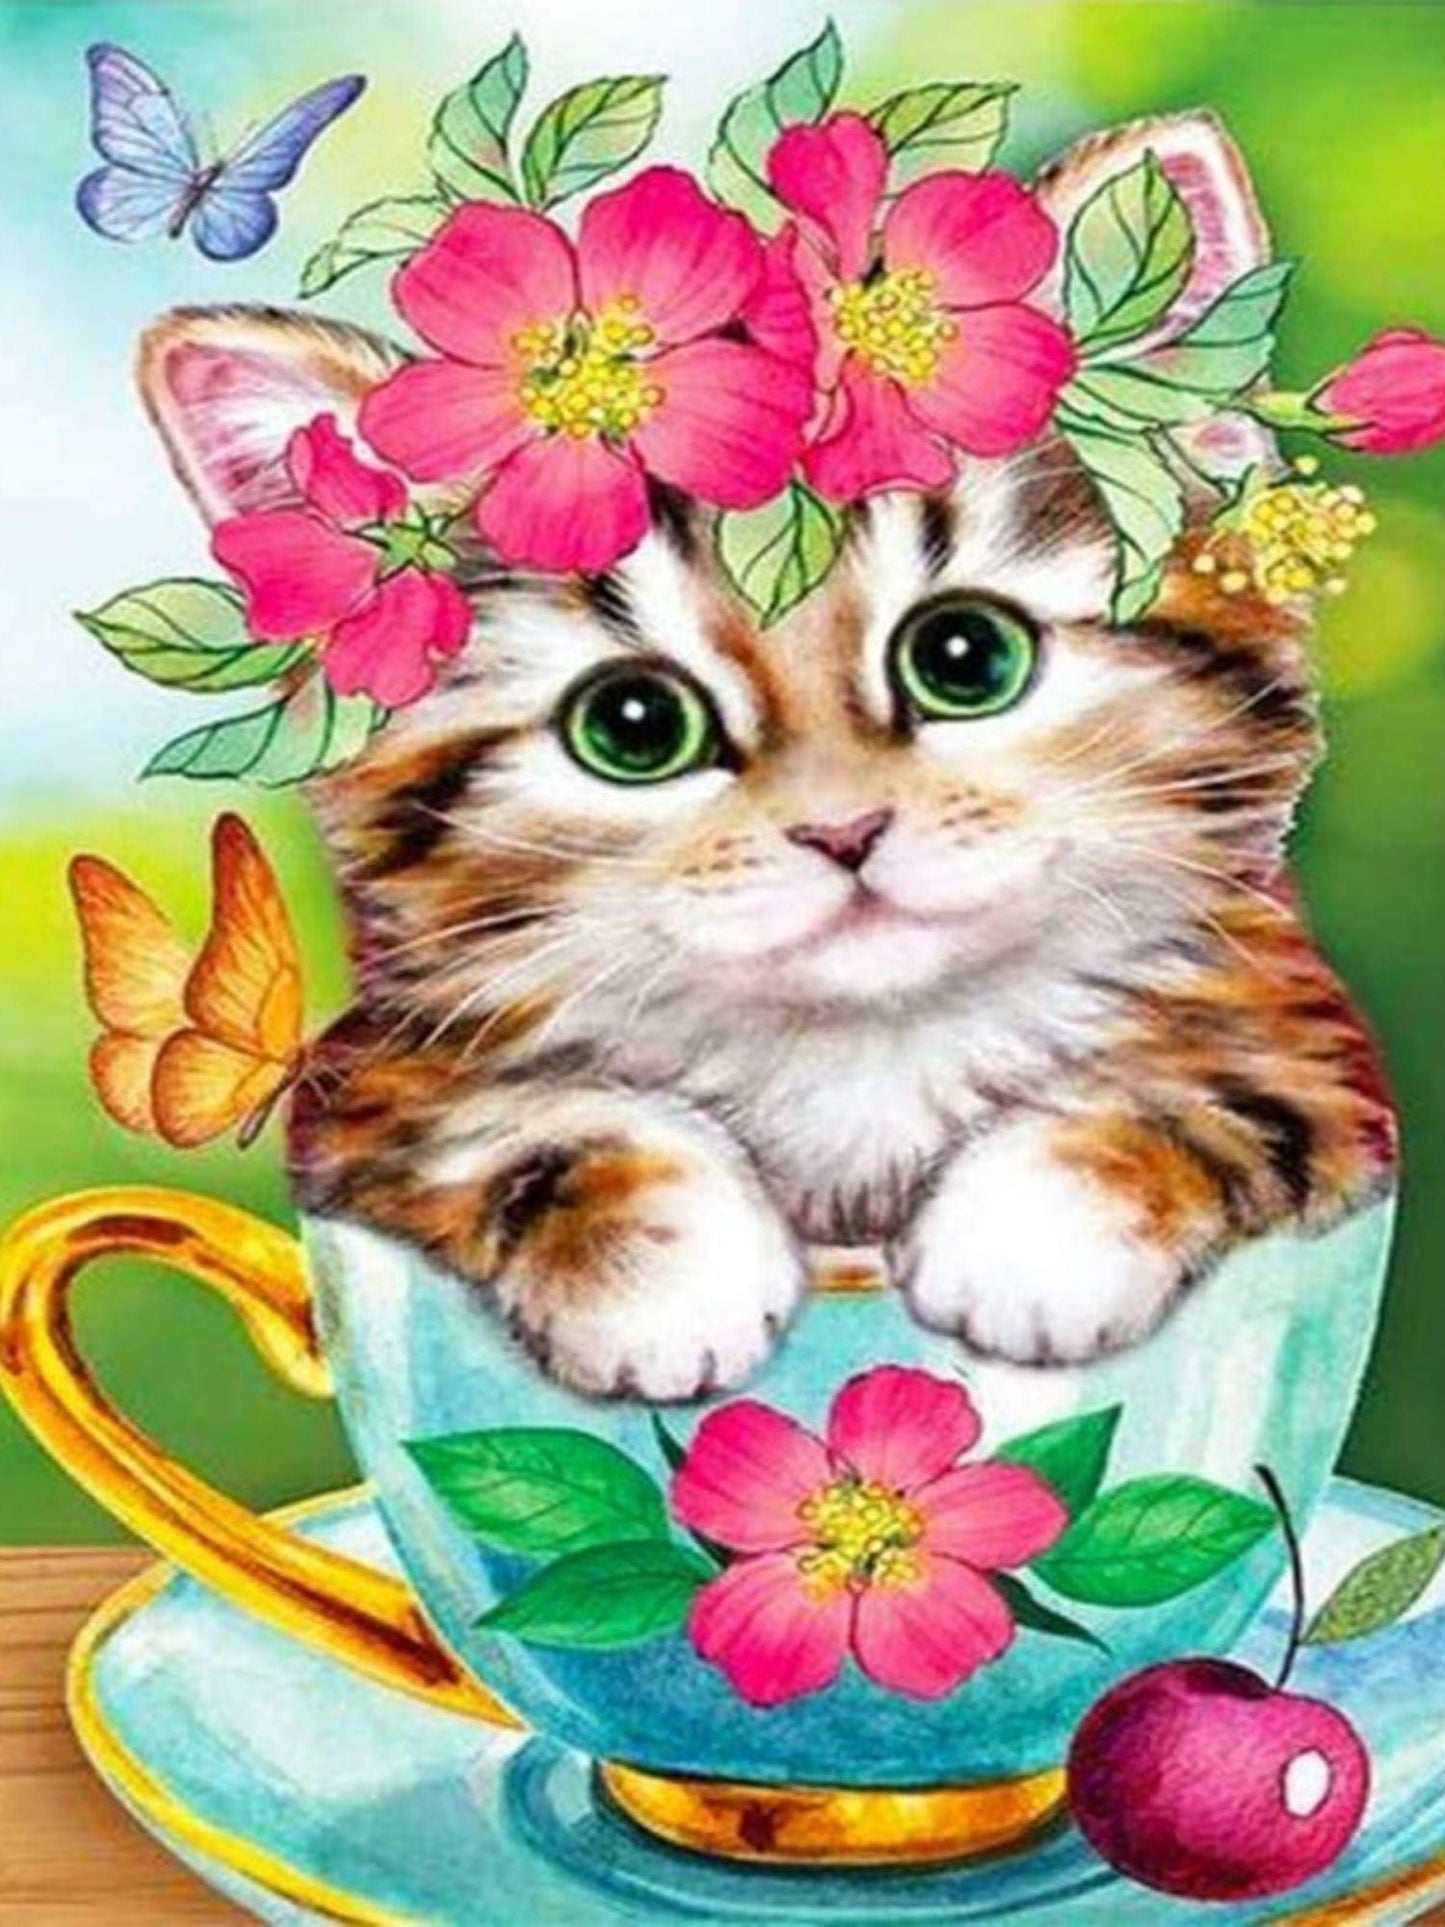 Cat in the Tea Cup - Diamond Art kit